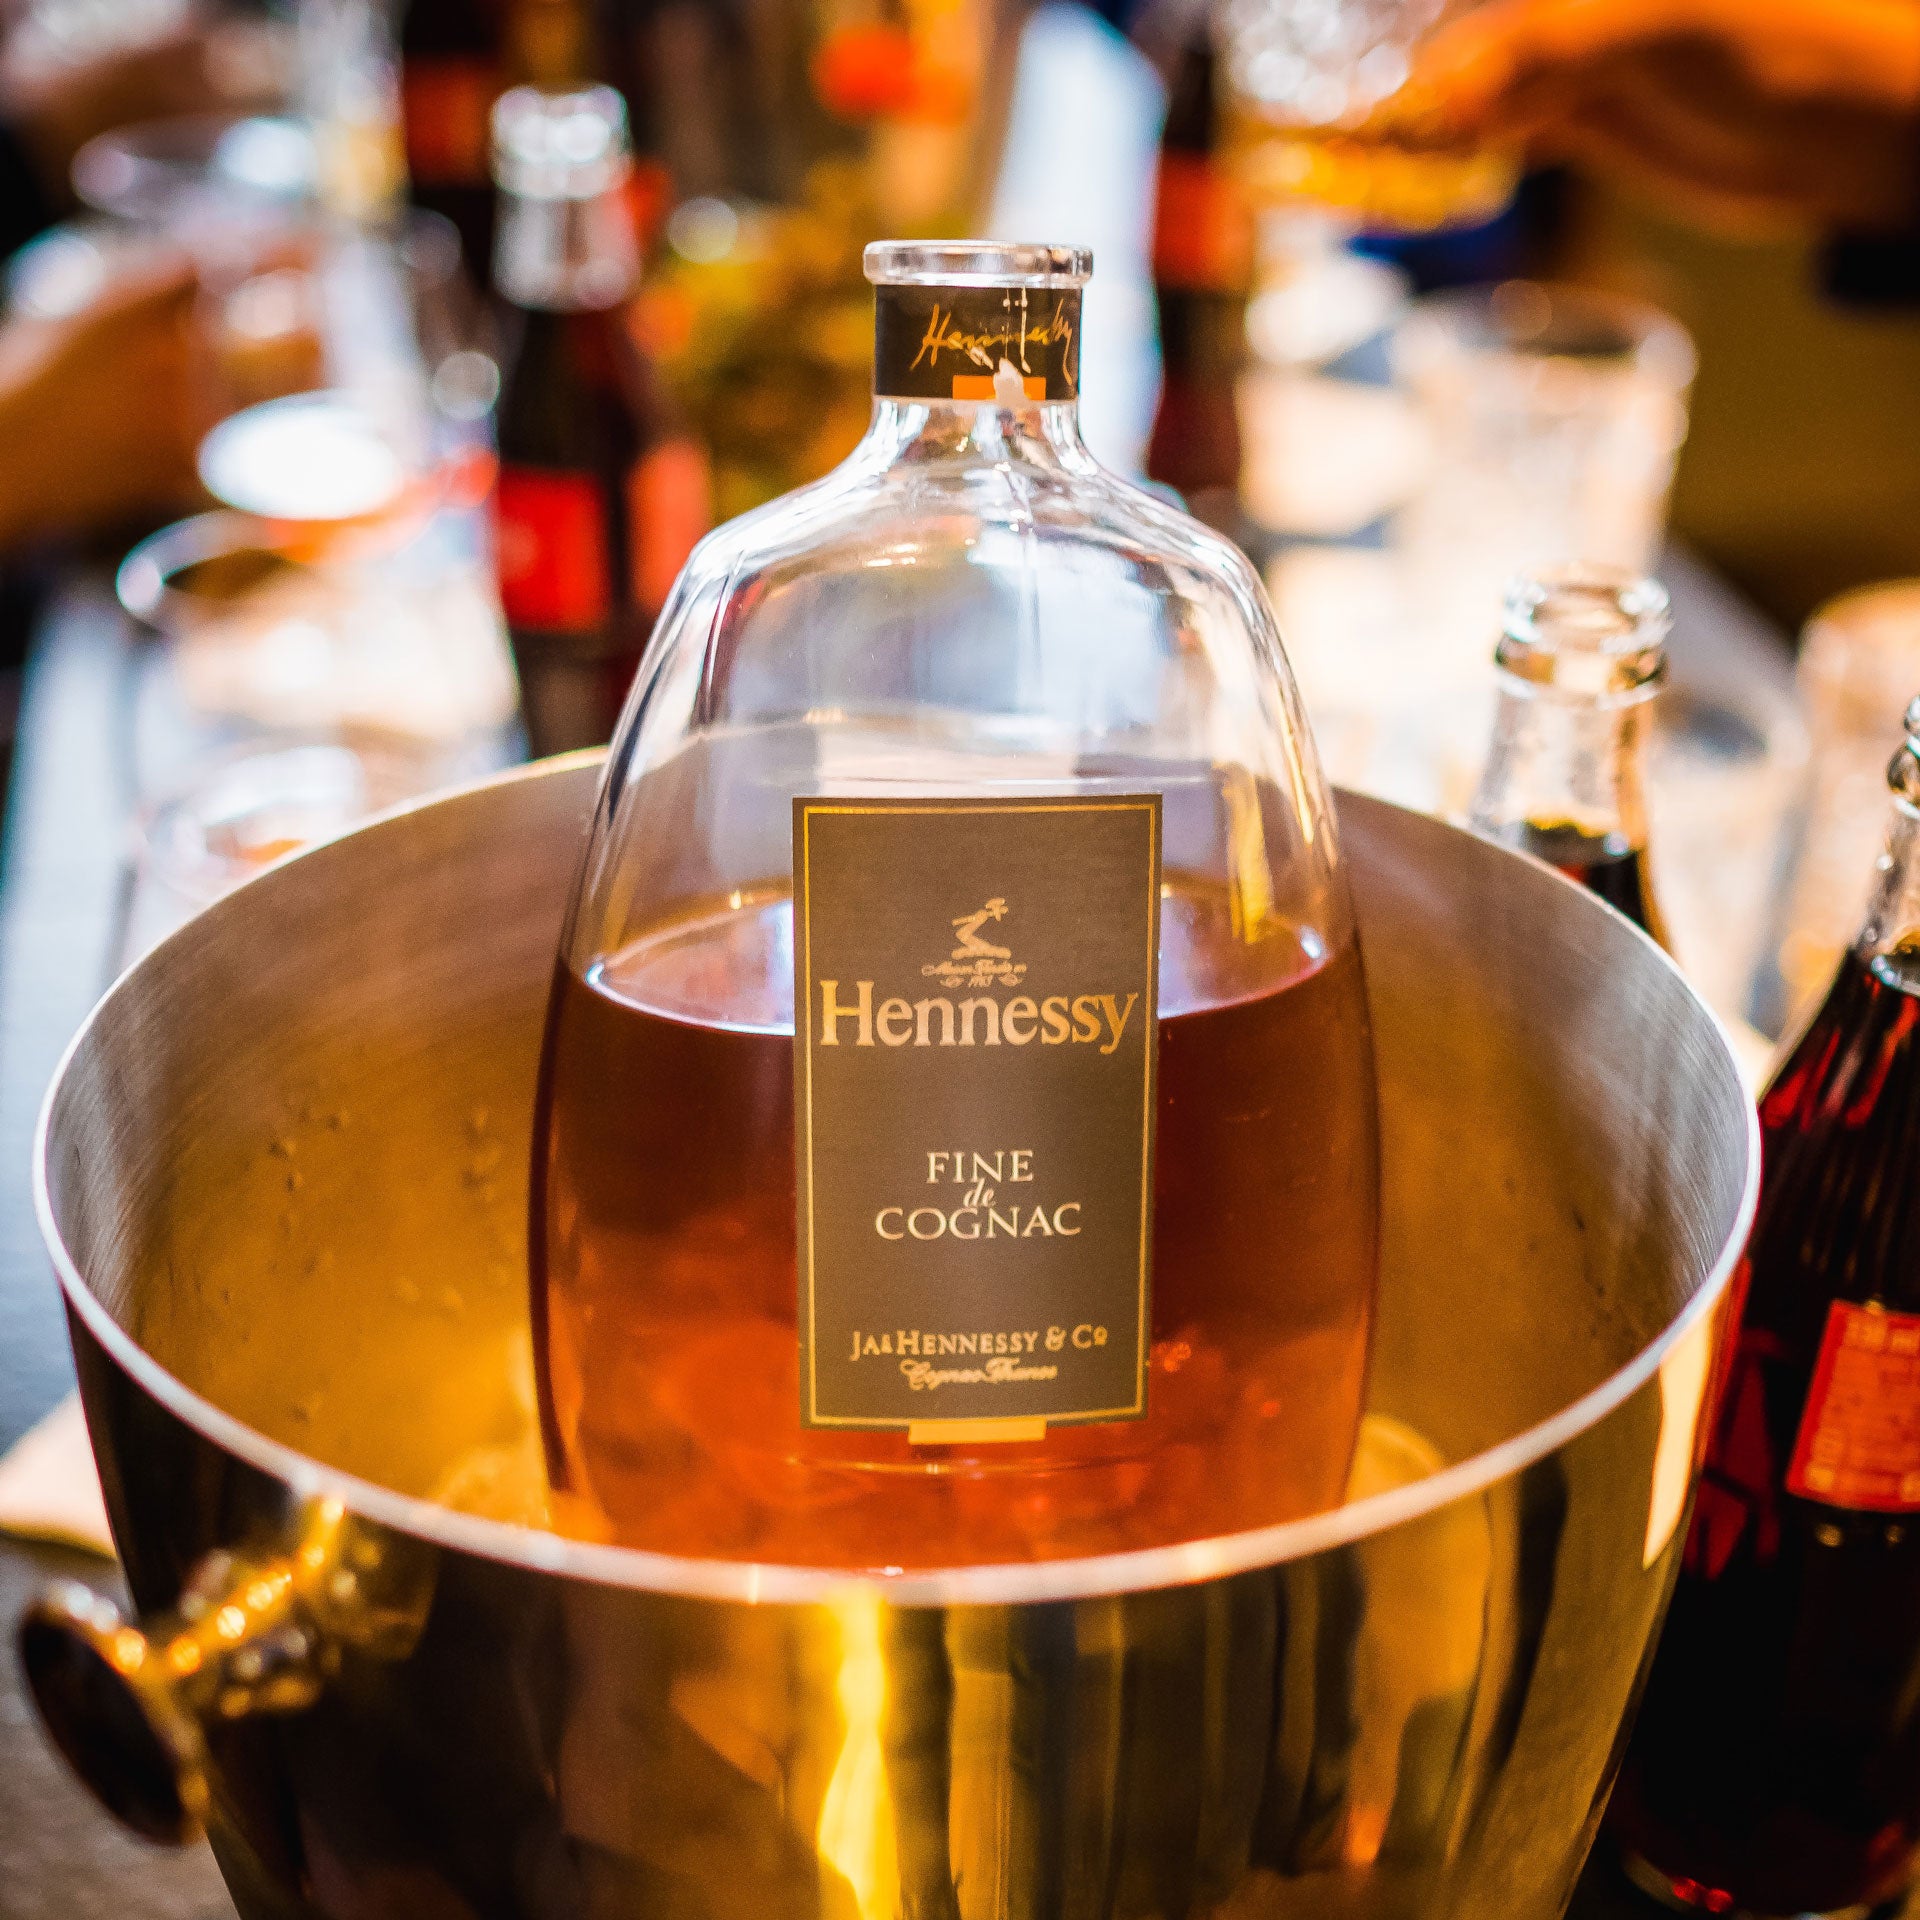 Hennessy VS Cognac 200 ml